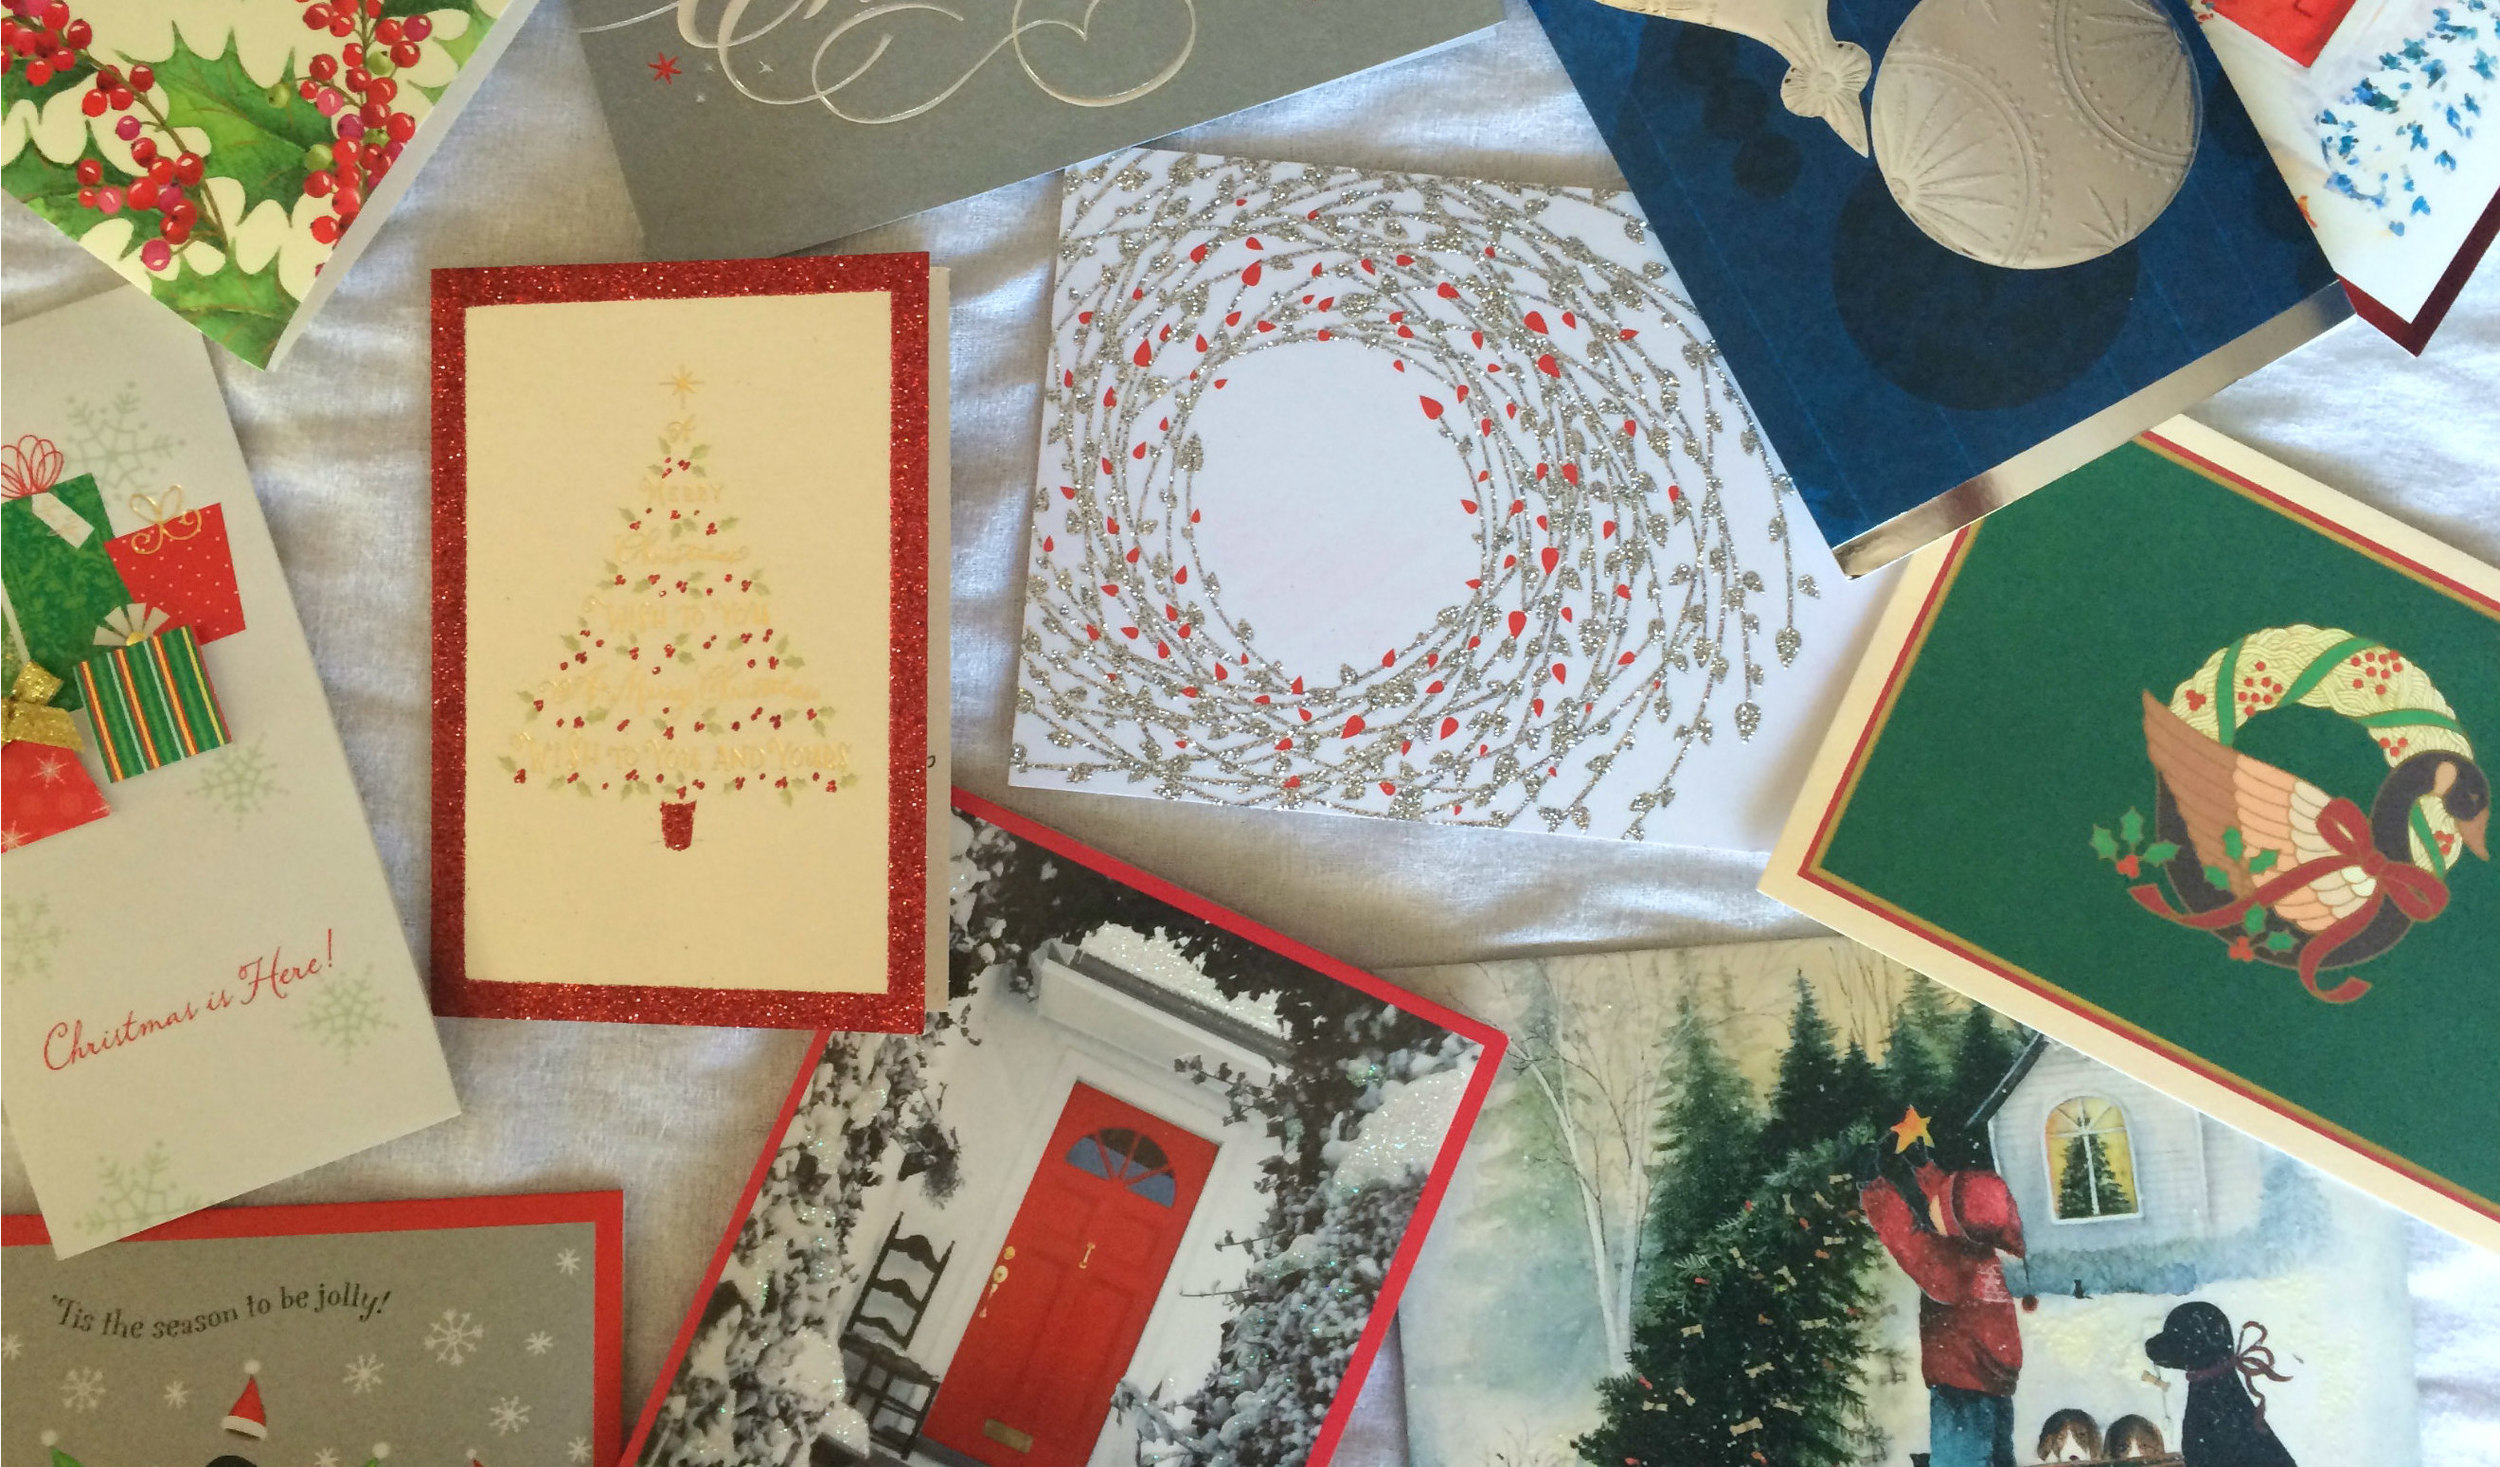 Easy Photo Craft - A Holiday Card Album — Shortcake Albums